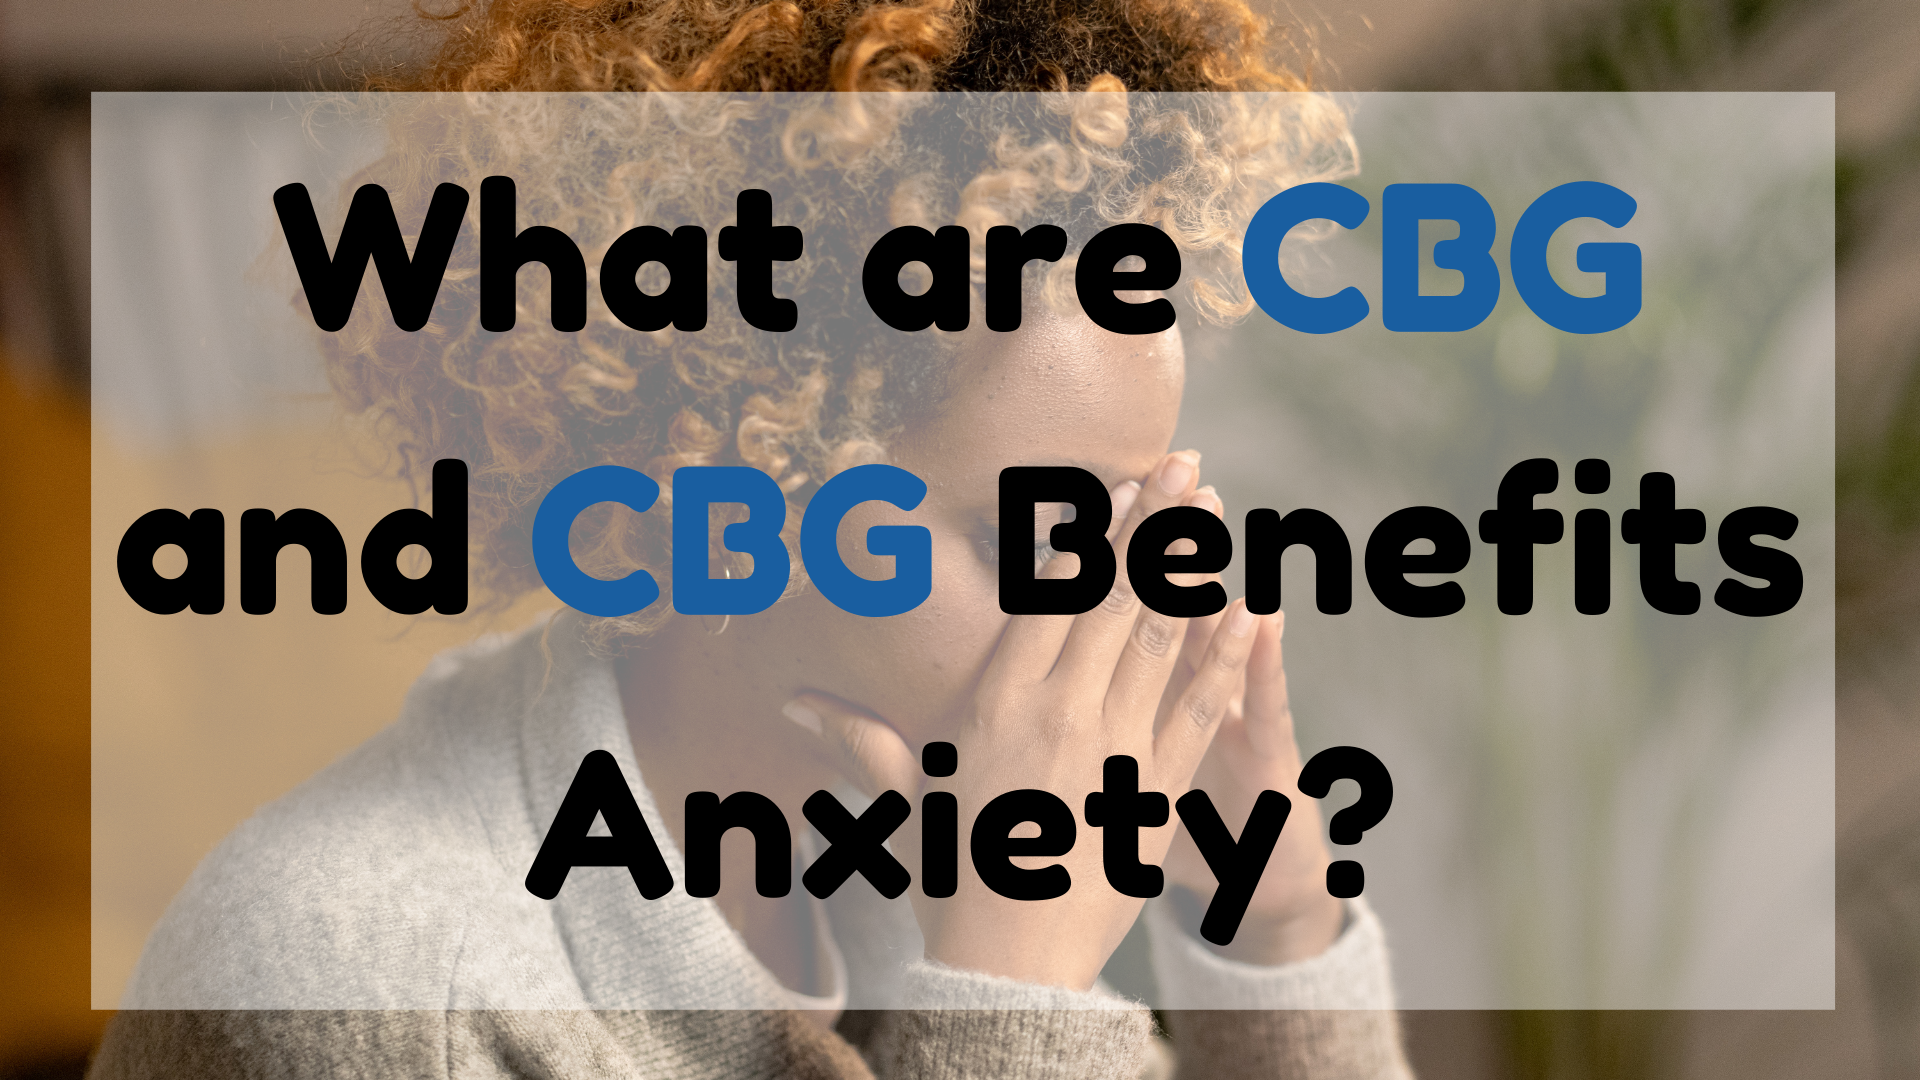 CBG and CBG Benefits Anxiety